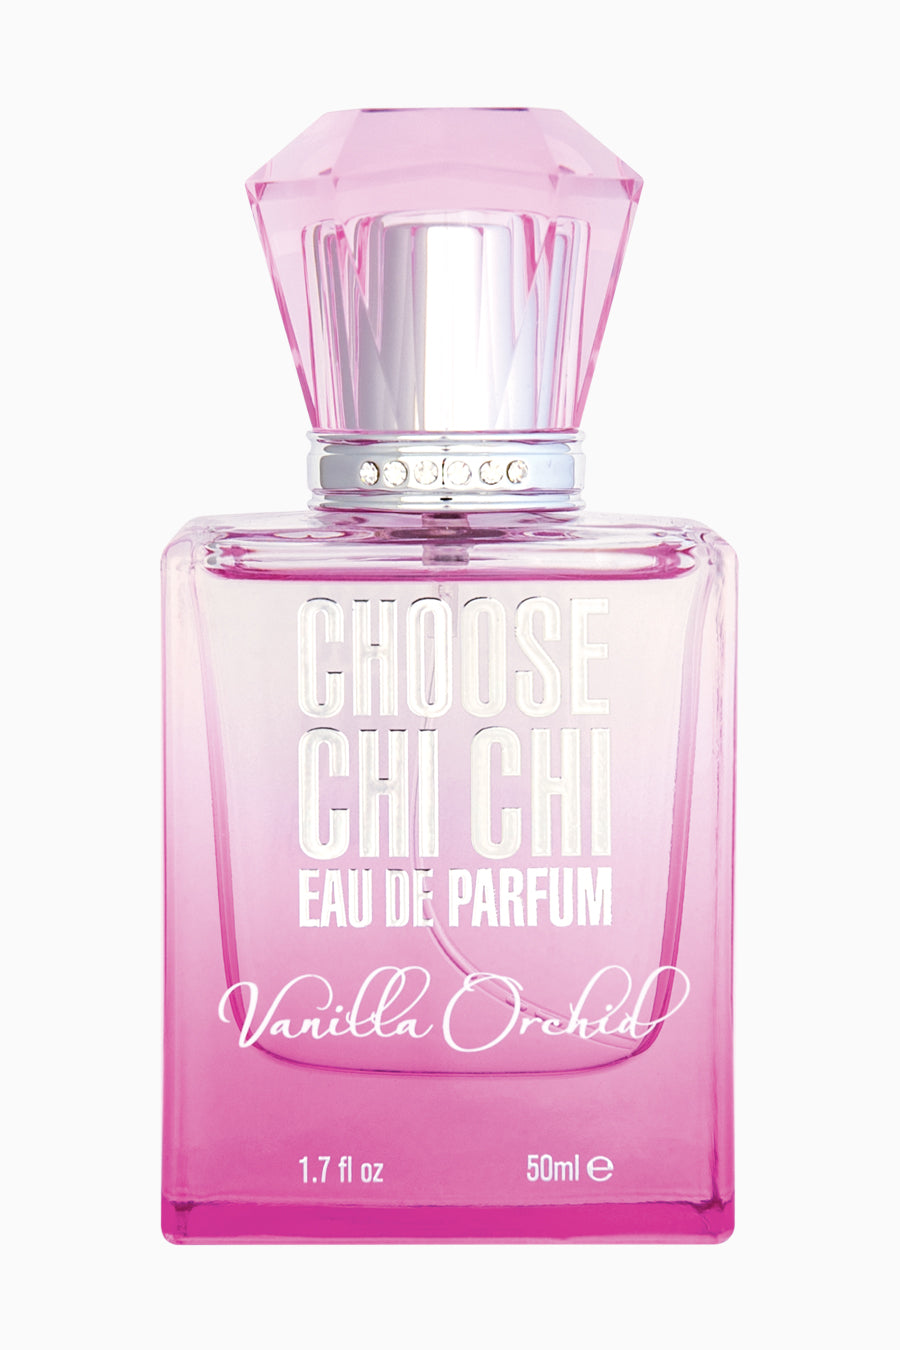 Vanilla Orchid - Eau De Parfum